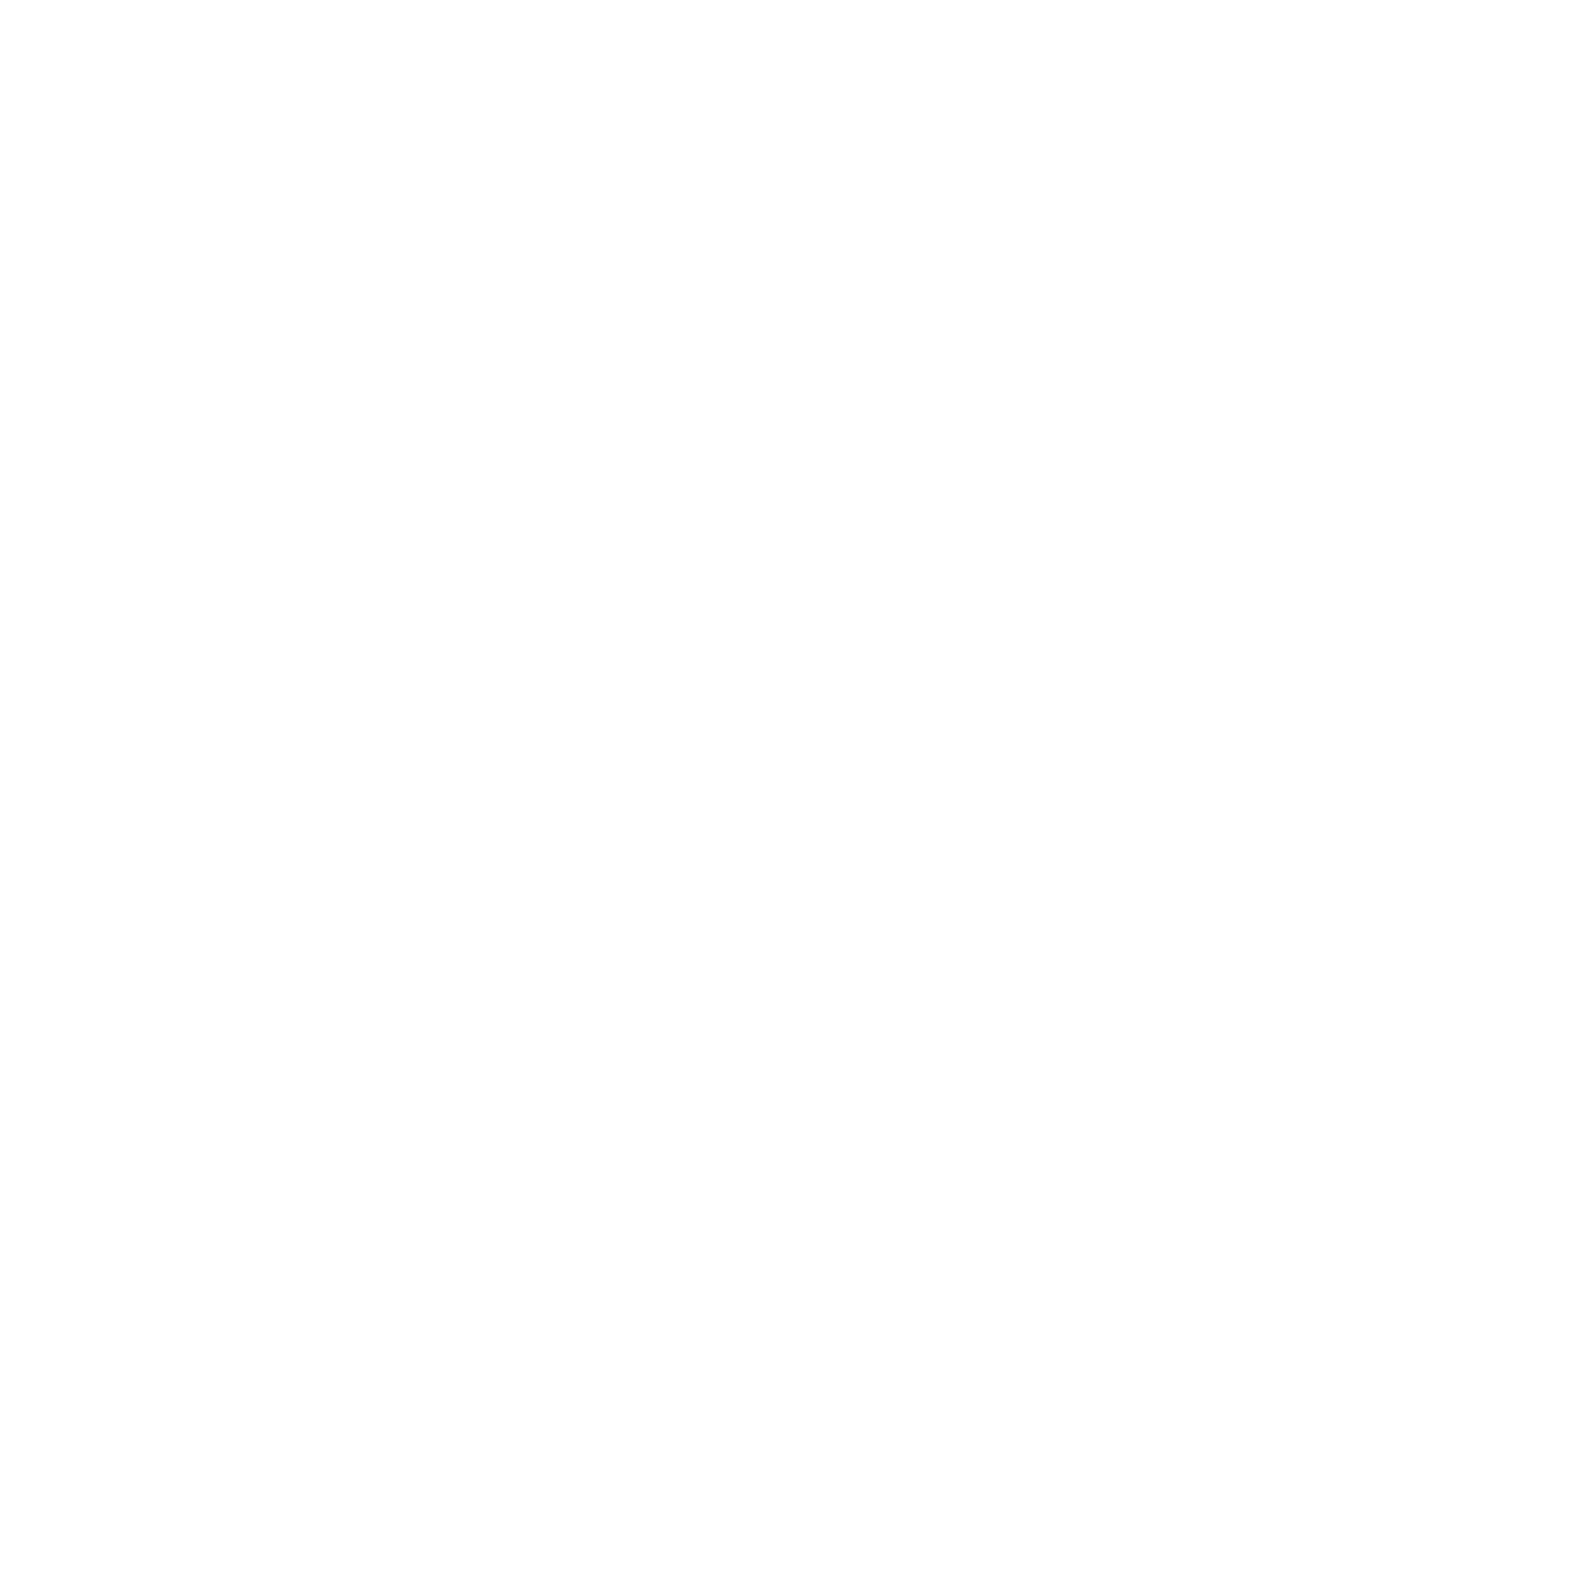 Scott Hancock Photography